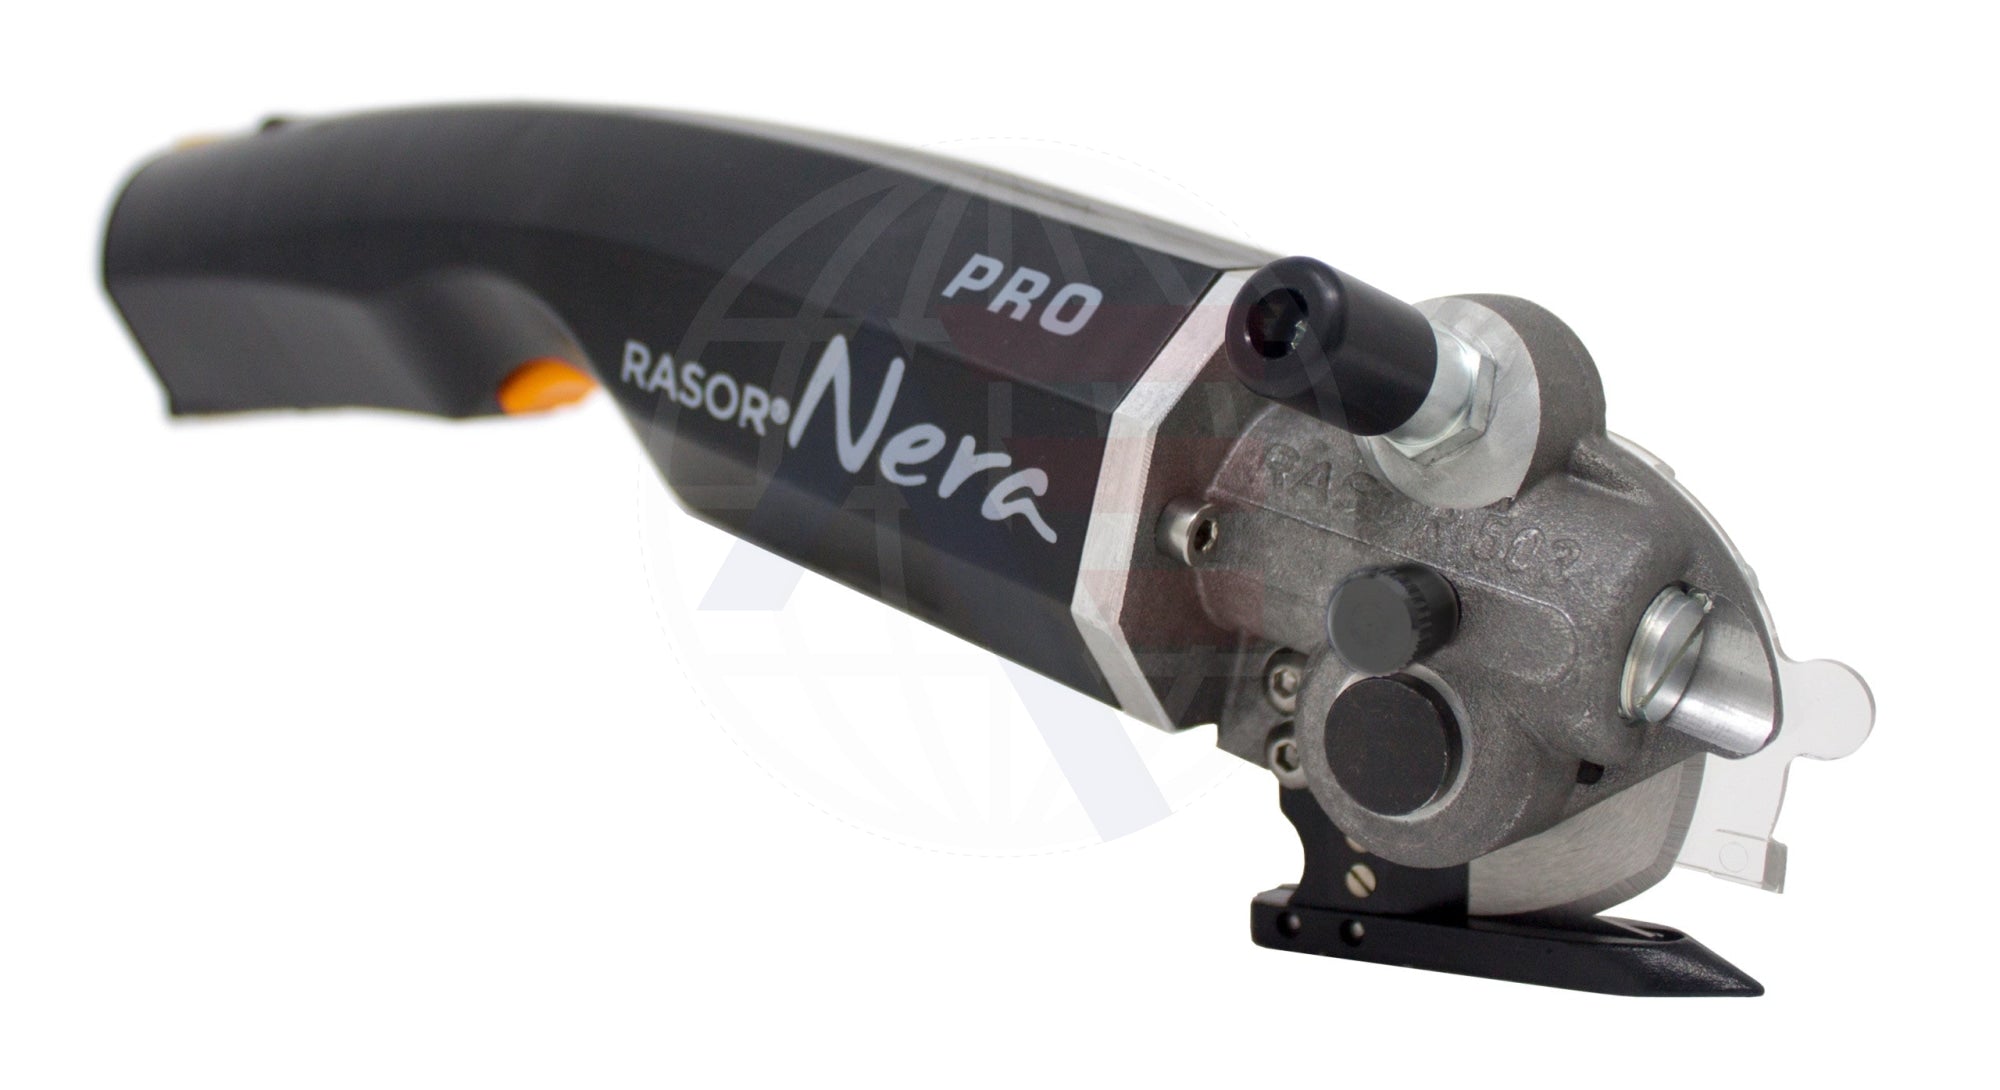 Rasor Nerapro Battery Scissor Cutting Machines